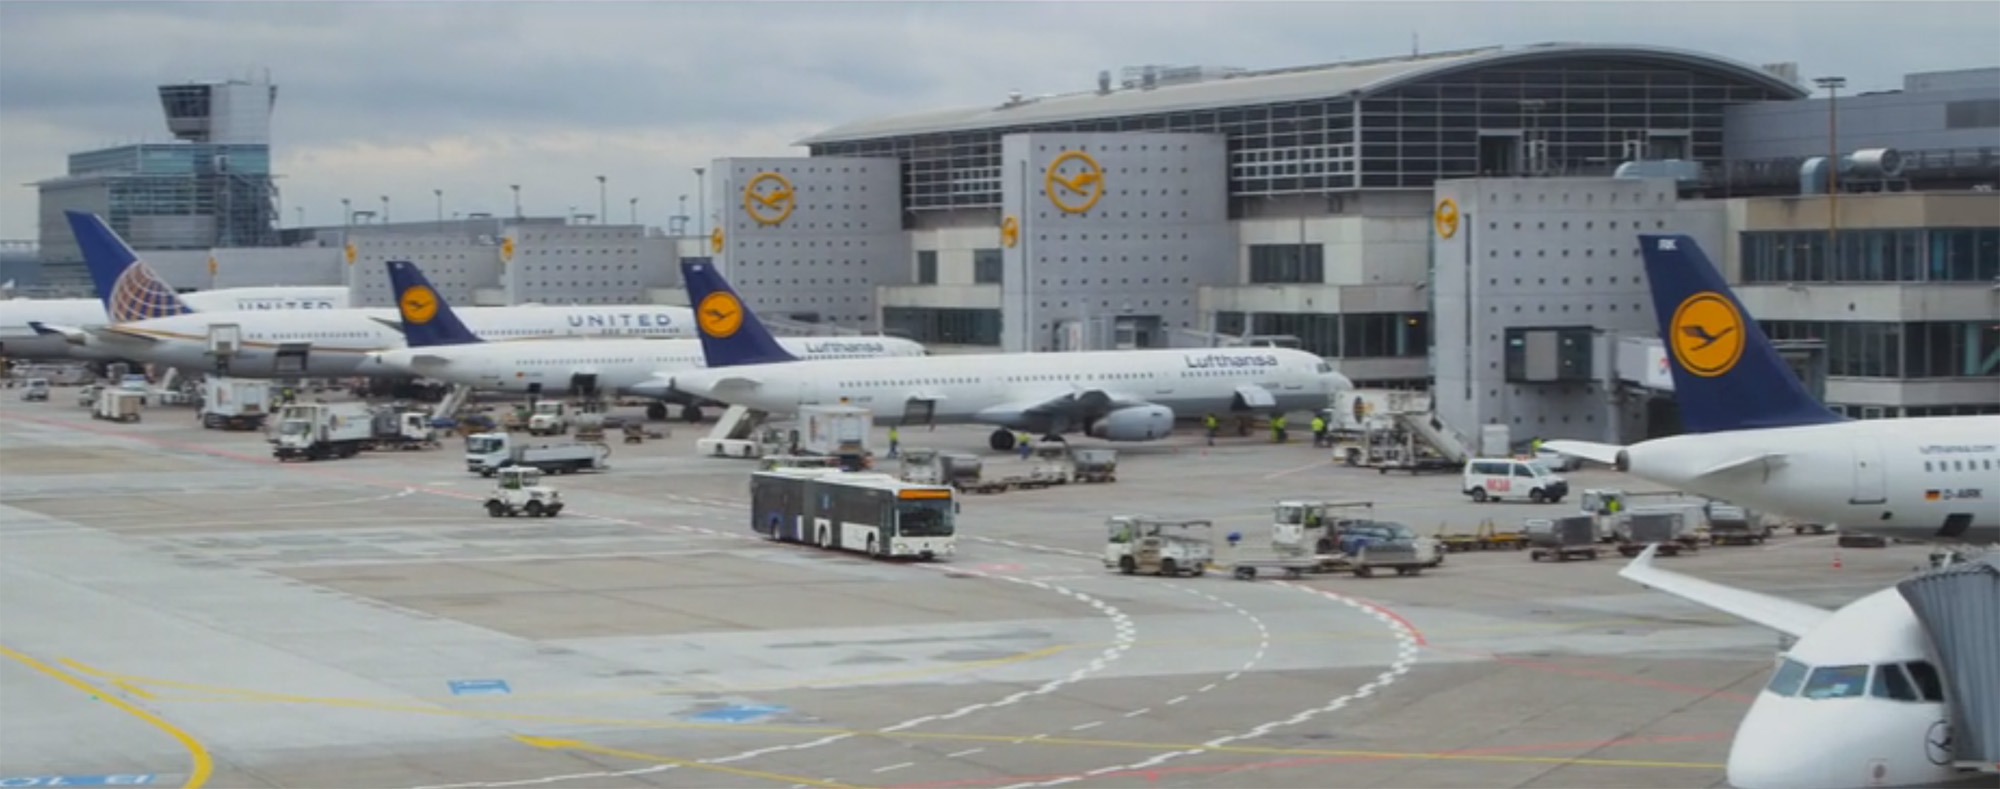 Filmproduktion, Frankfurt, Airport, Fraport, Lufthansa, Imagefilm, Werbefilme